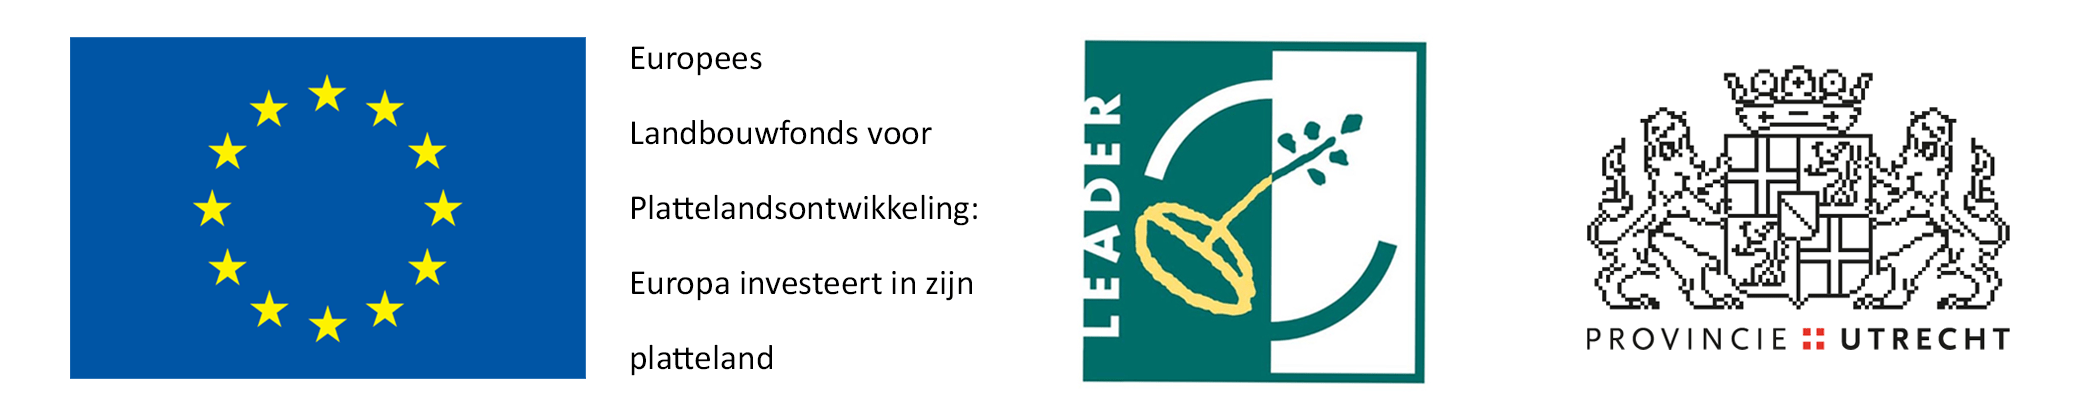 //www.hetsporthuisabcoude.nl/wp-content/uploads/2019/06/Logo-Europees-landbouwfonds-Leader-Provincie-Utrecht.png